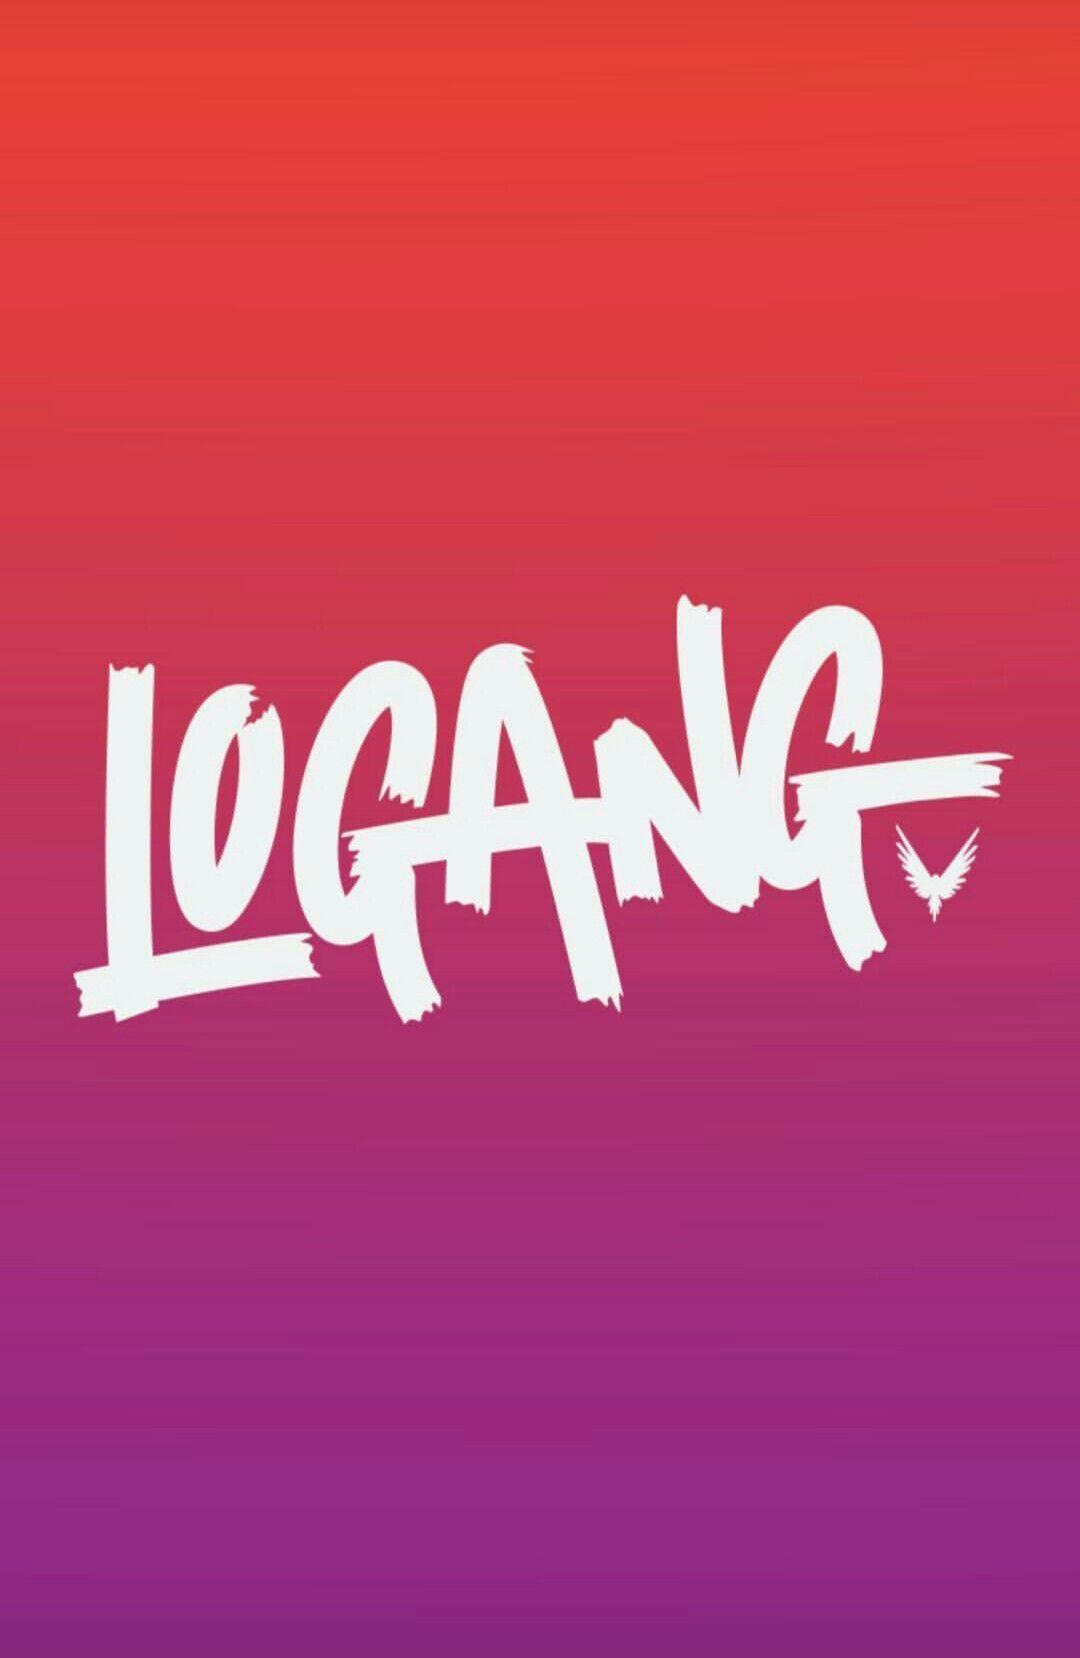 Calling all the logang #Screensaver #loganpaul. Logang. Logan paul vlogs, Logan paul, Logang wallpaper